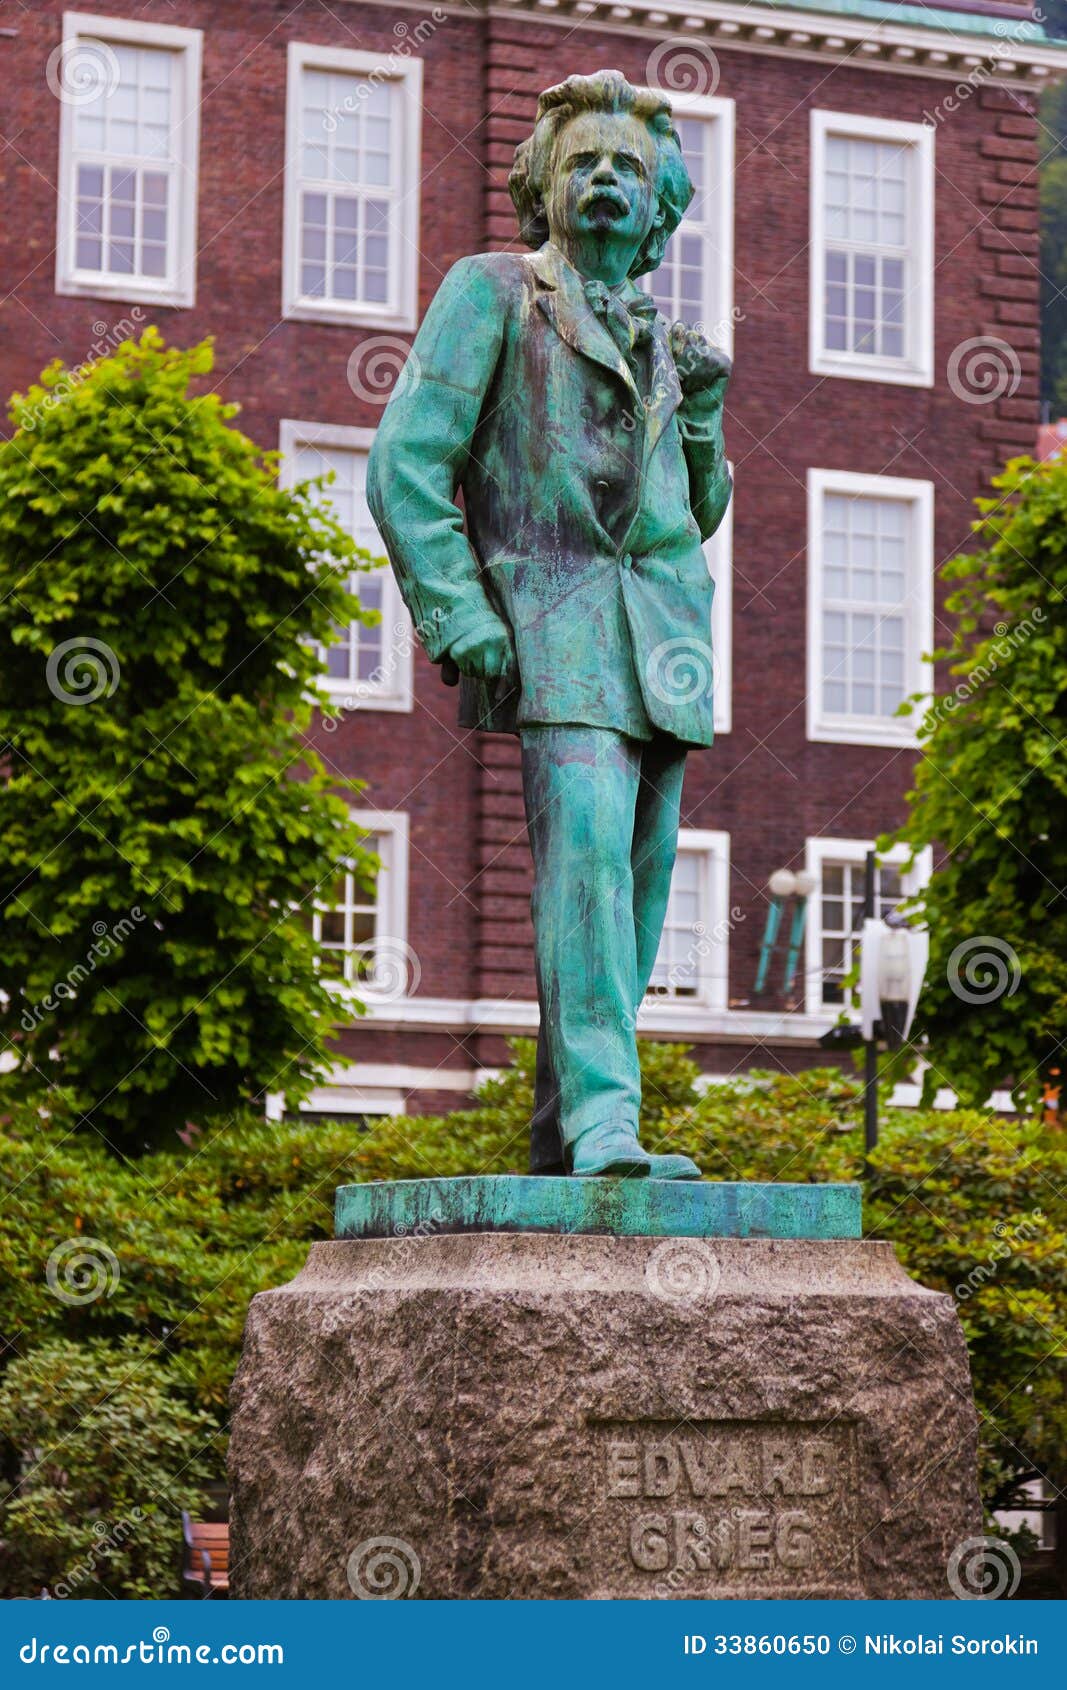 statue of composer edvard grieg - bergen norway